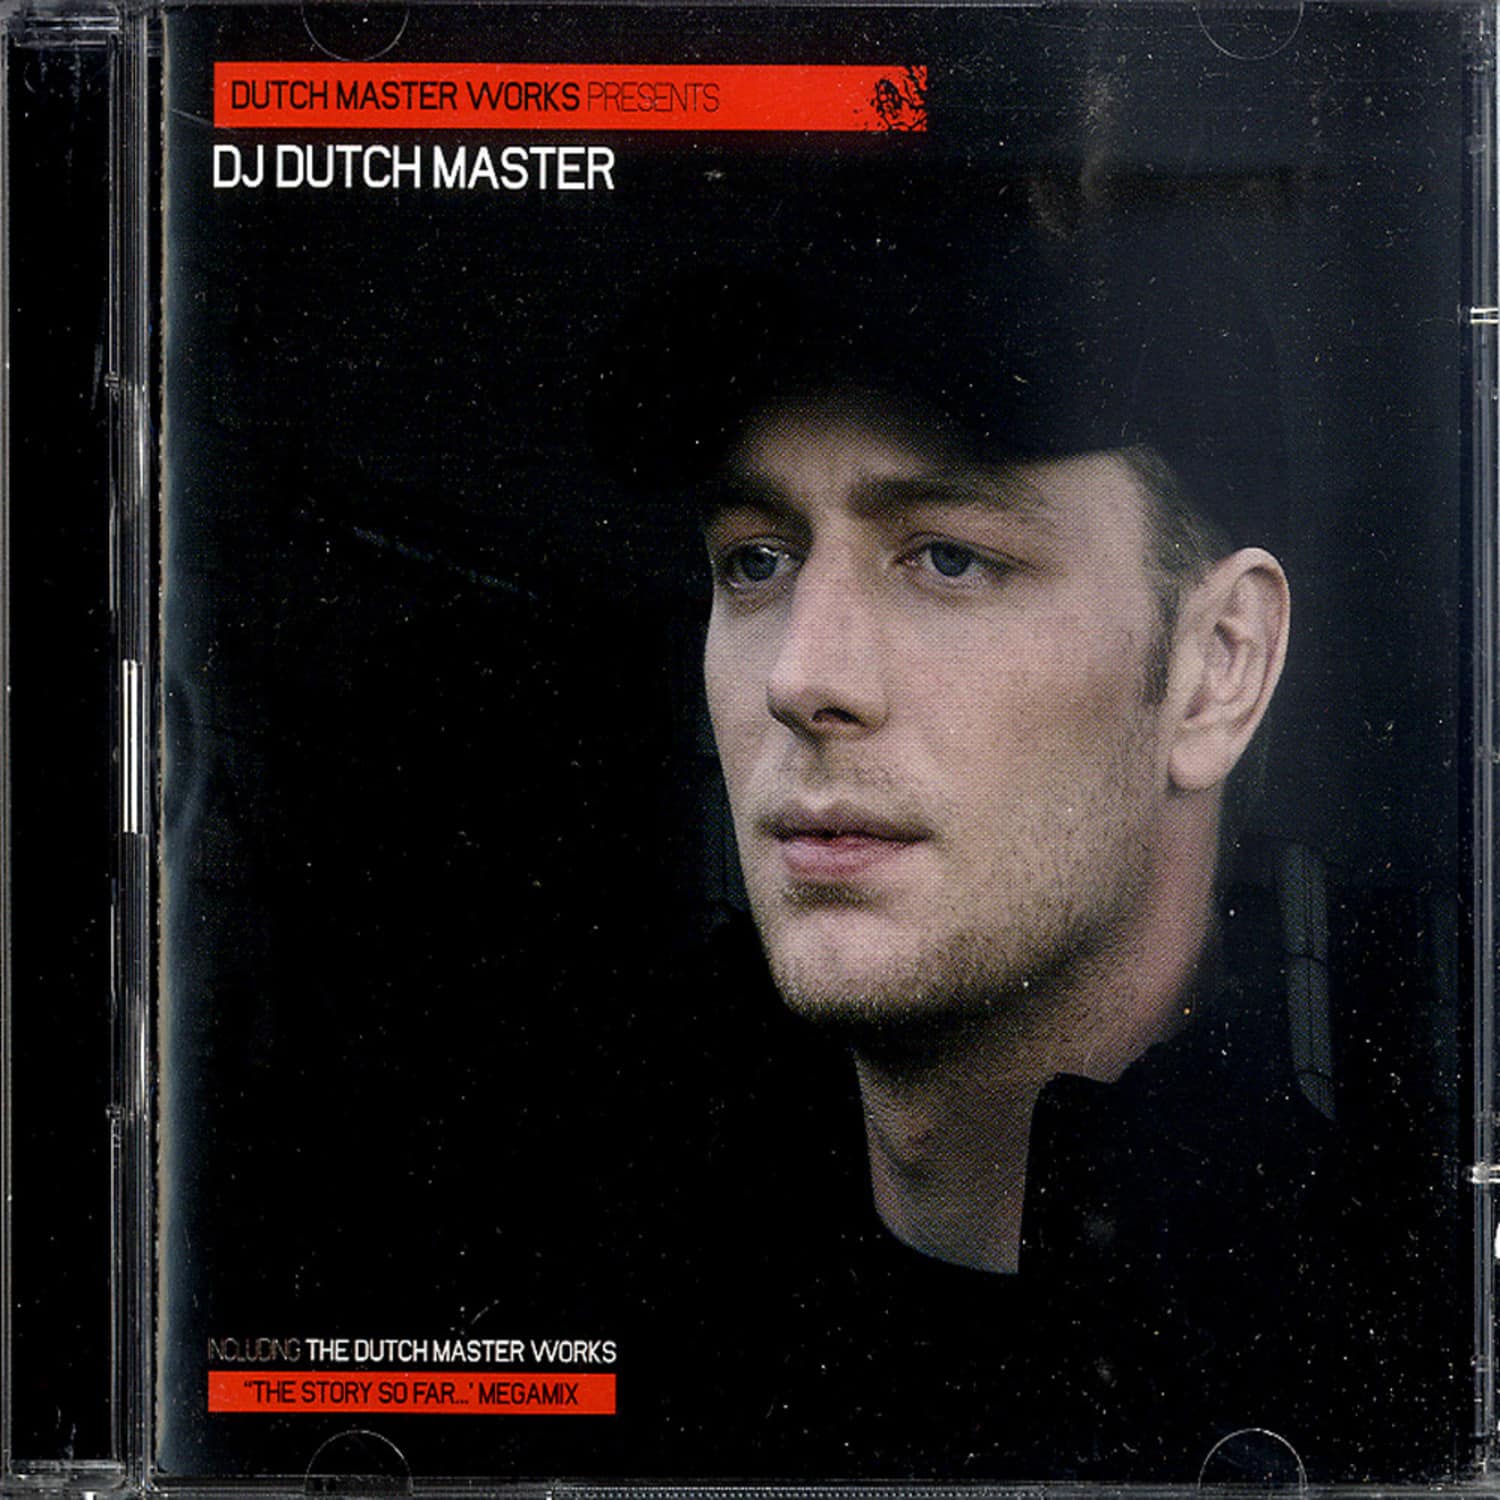 DJ Dutch Master - DUTCH MASTER WORKS PRESENTS 